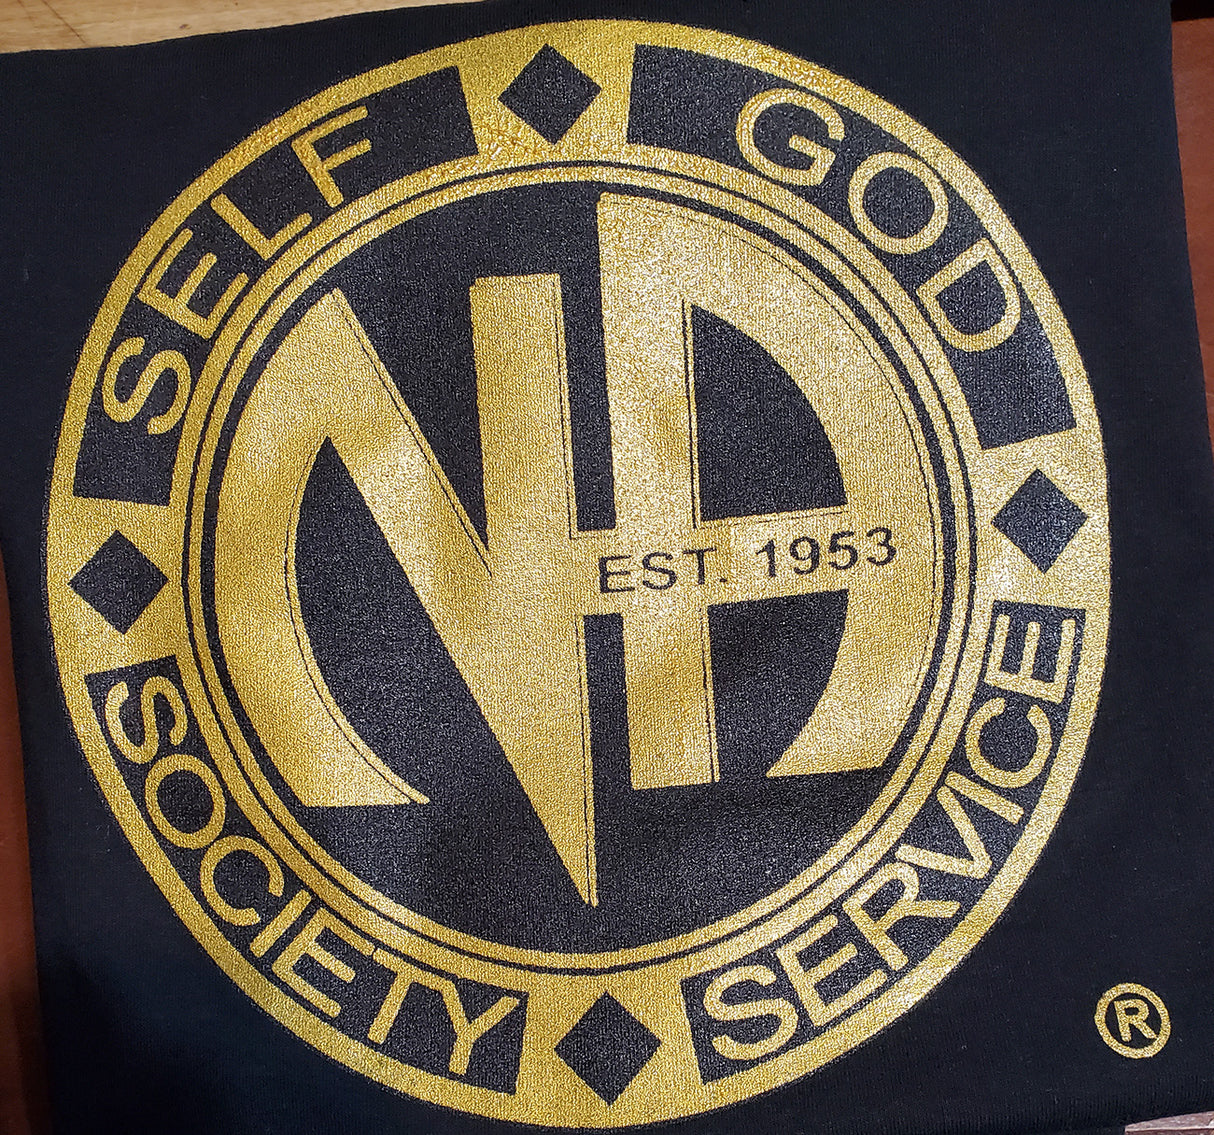 Self God Society Service GOLD SS/LS Tee